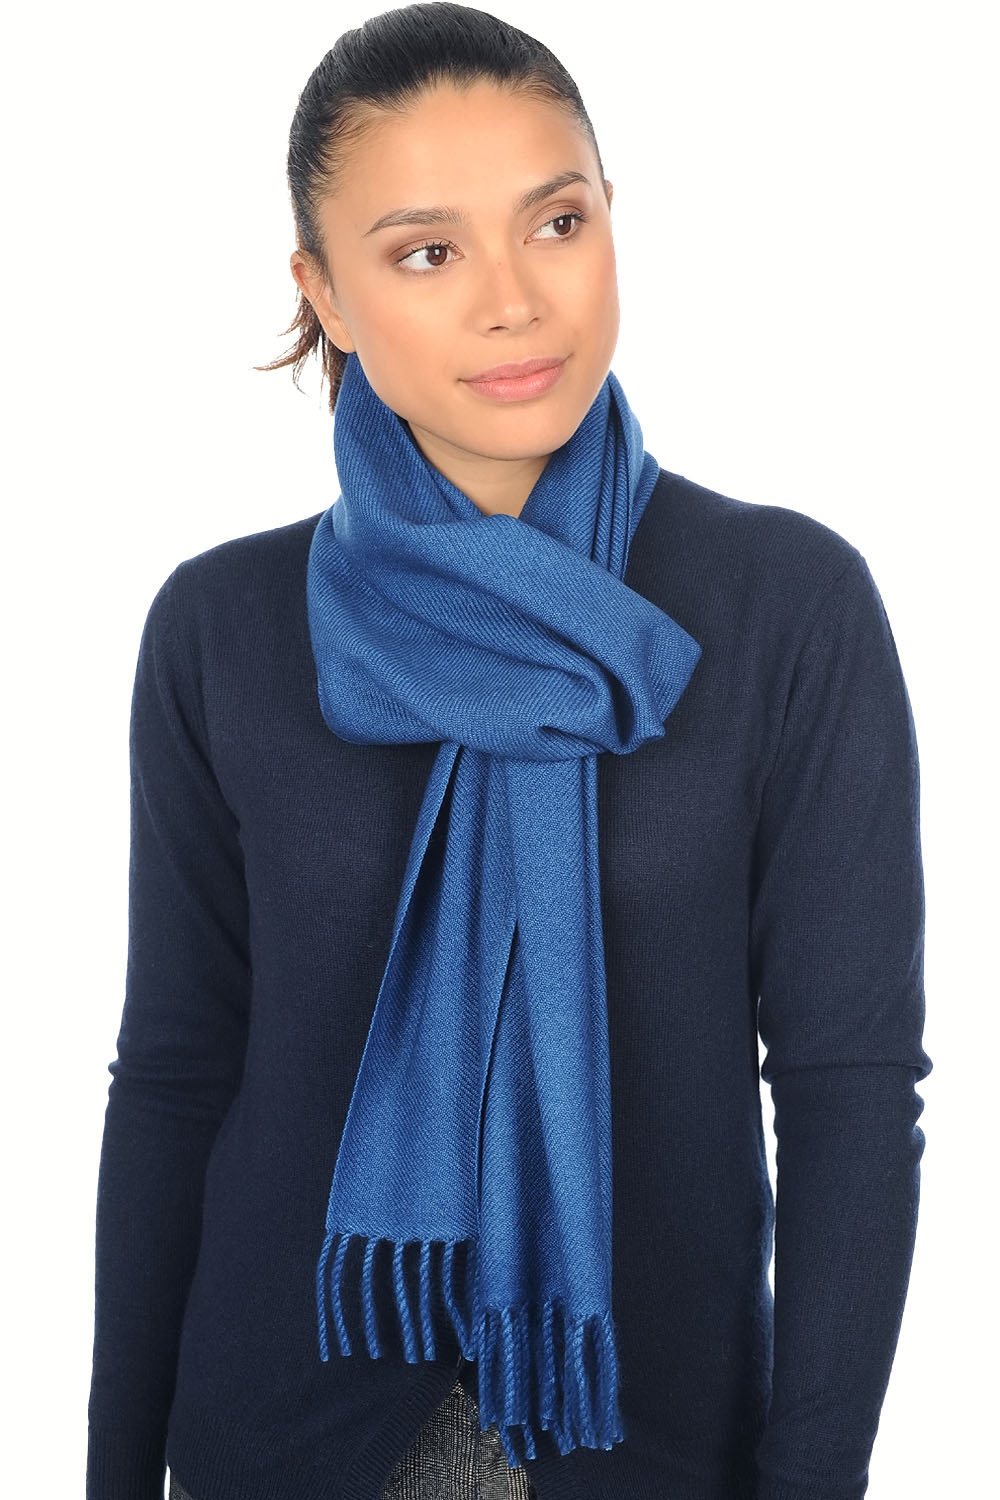 Cashmere ladies scarves mufflers zak200 dark blue 200 x 35 cm